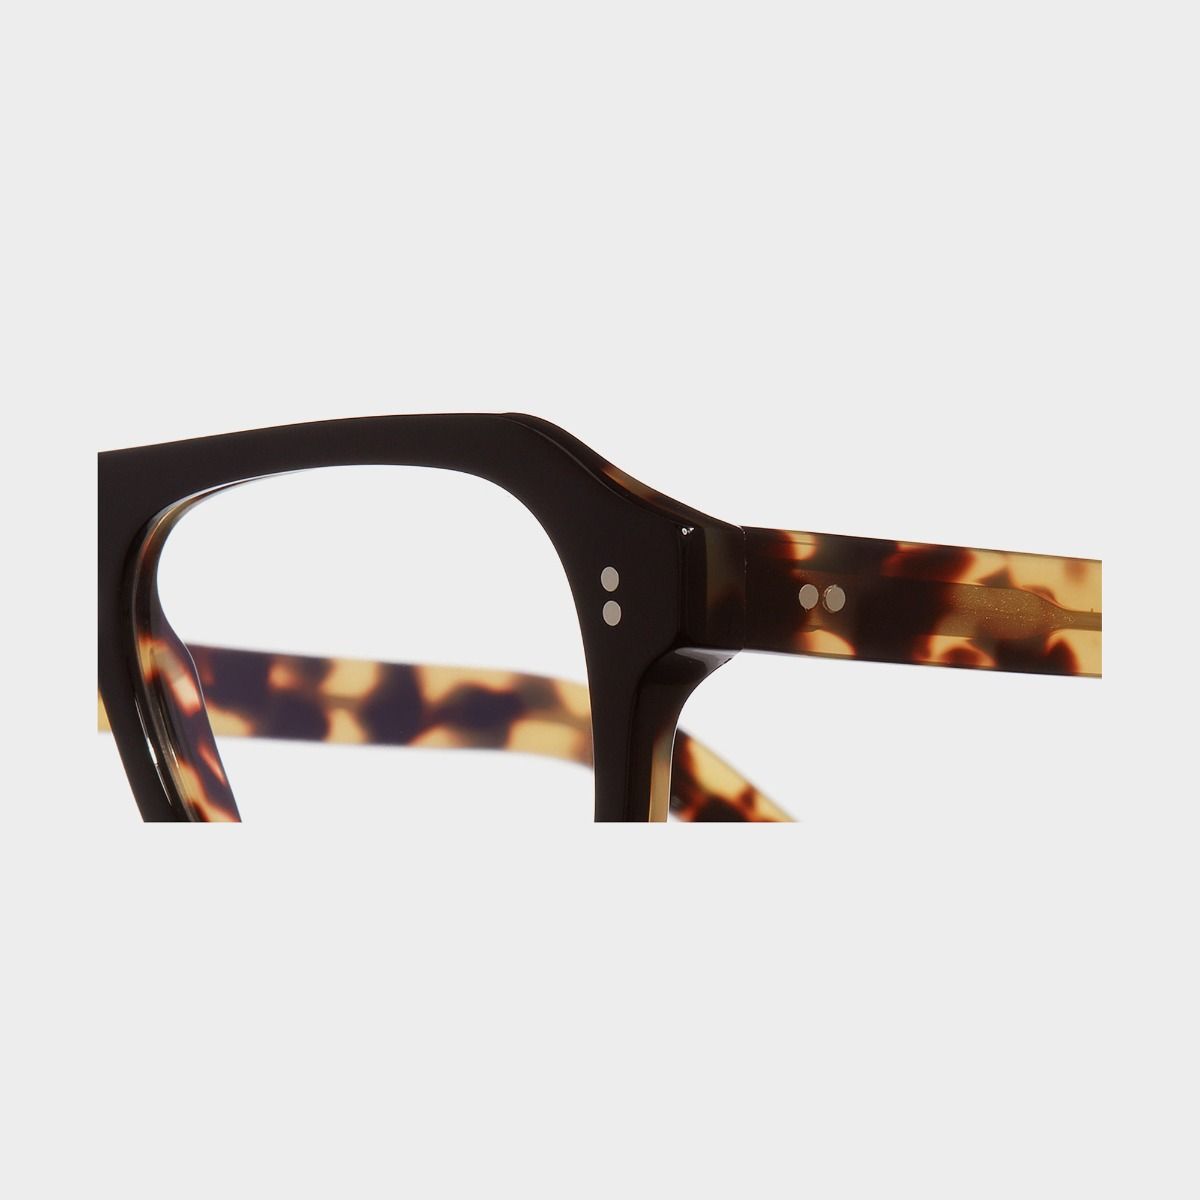 0822V2 Cutler and Gross, Optical Aviator Glasses - Black on Camo